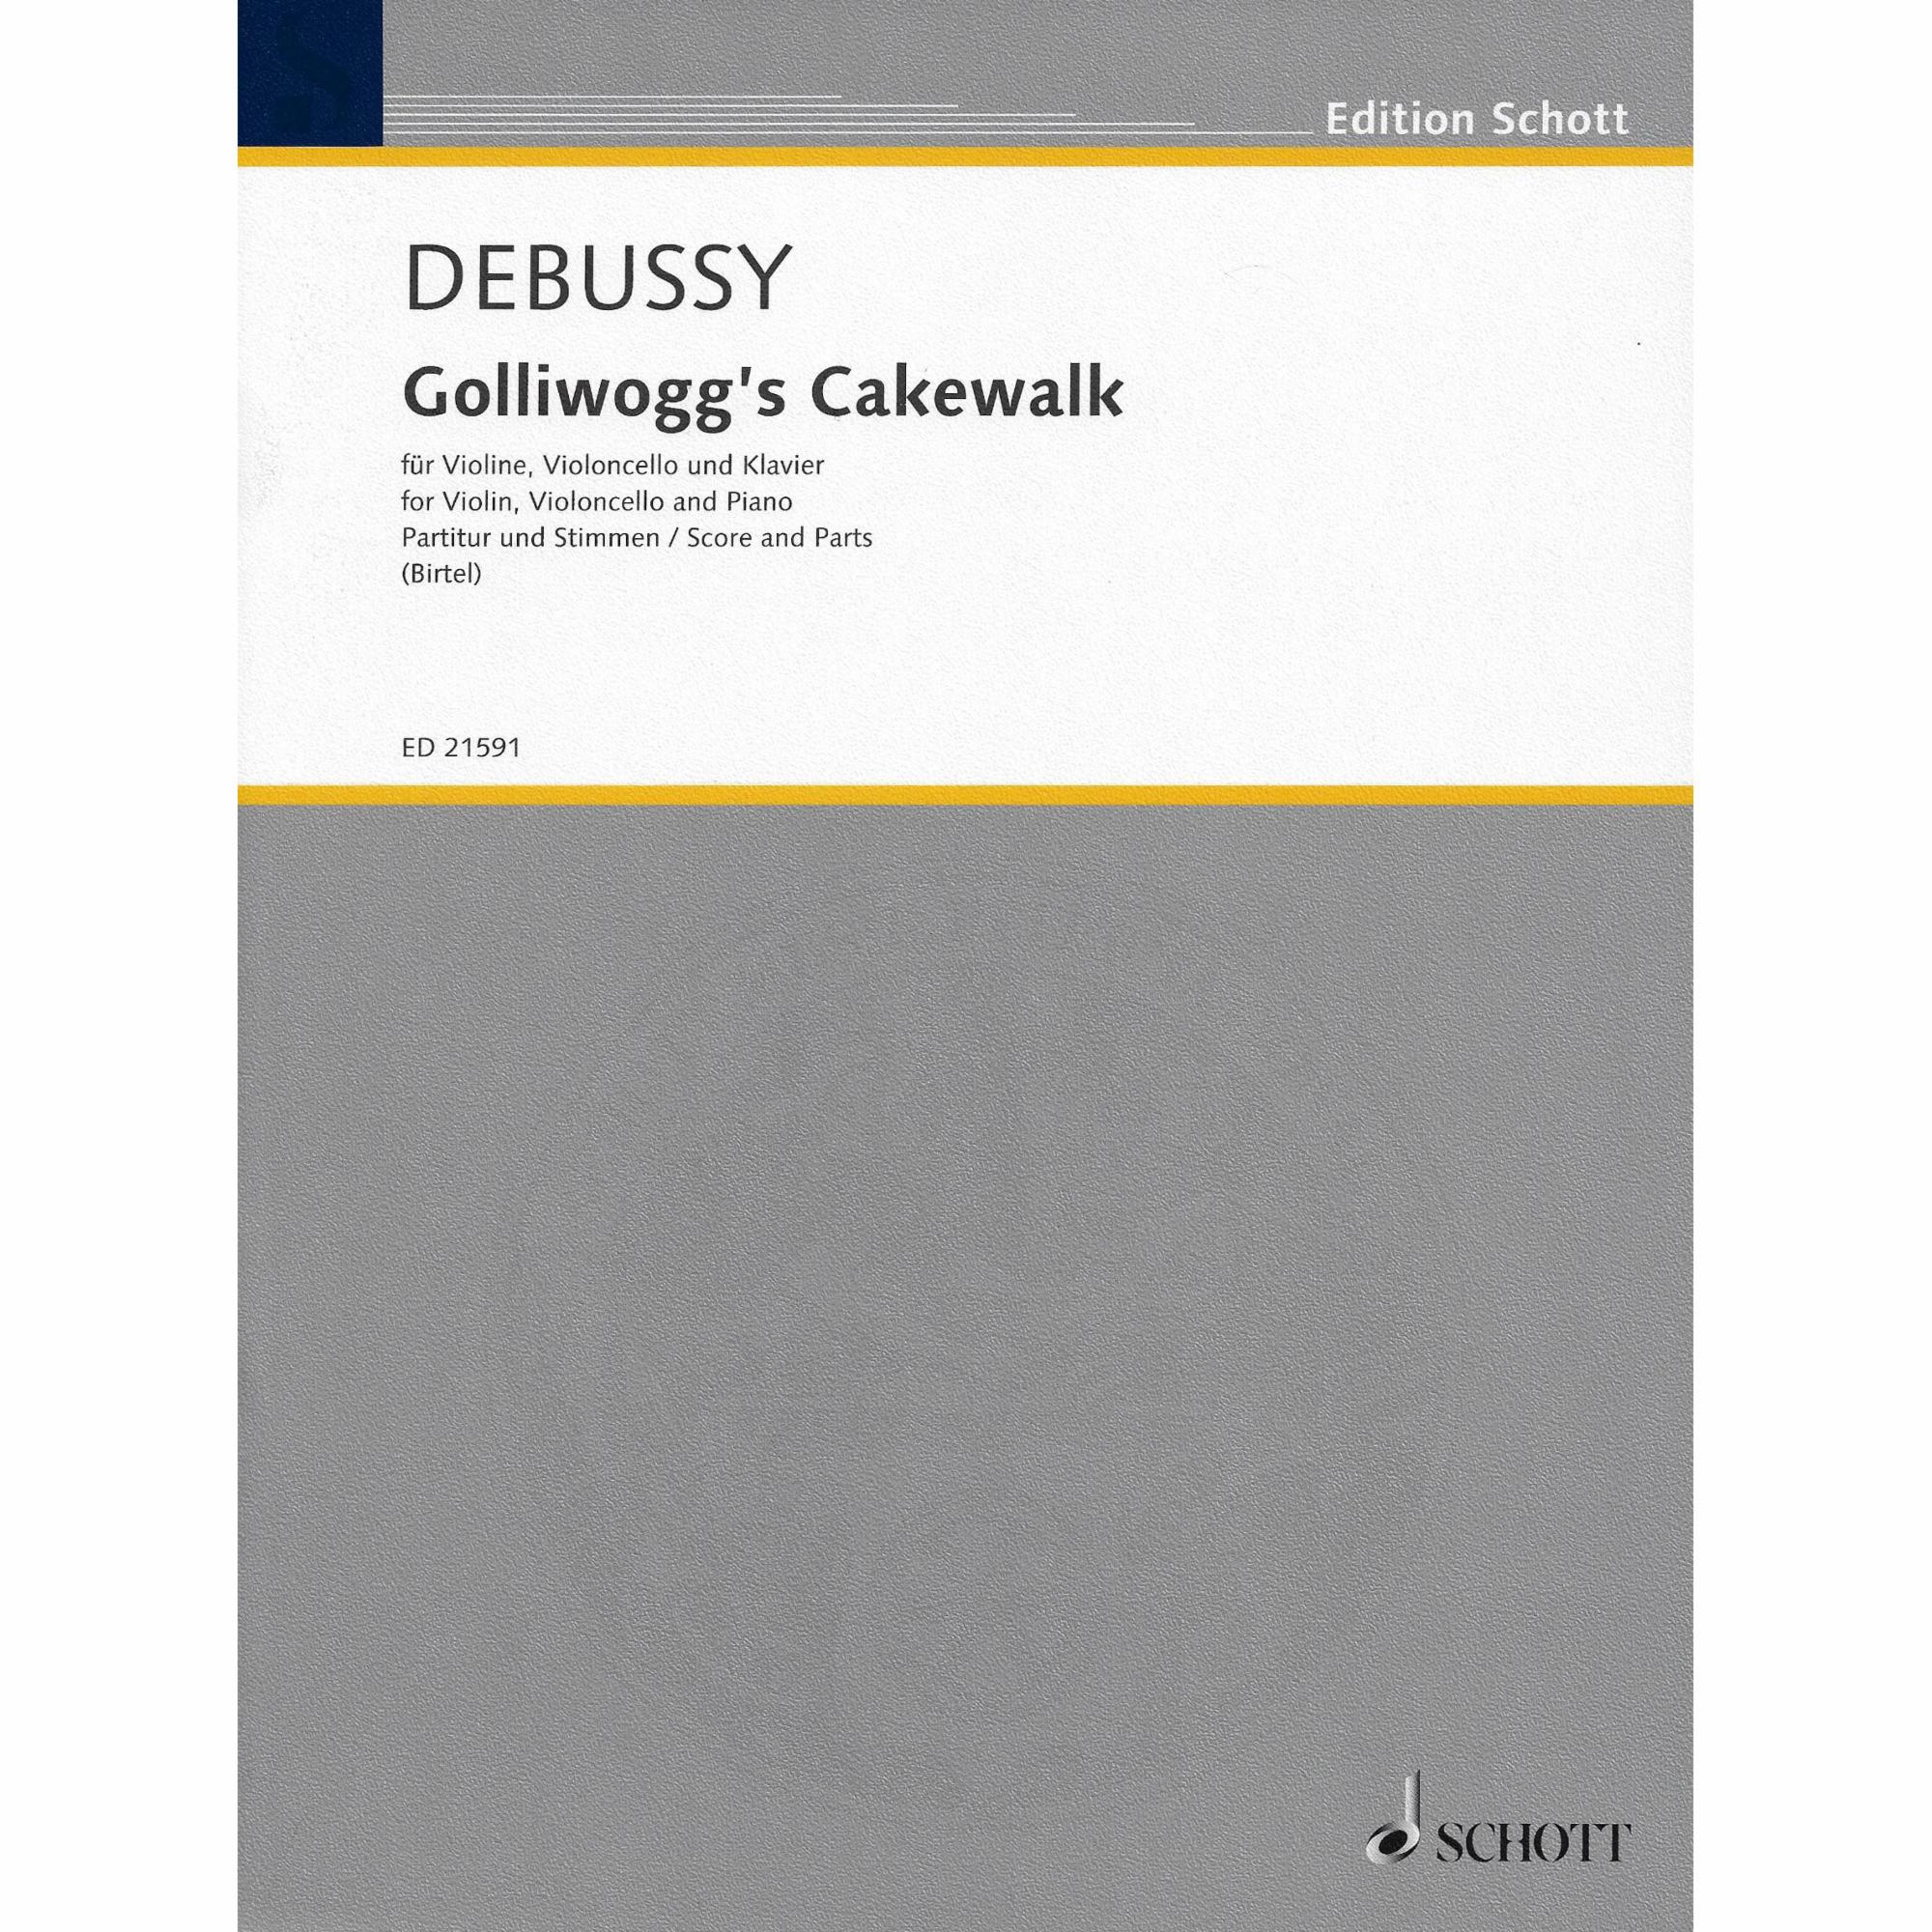 Debussy -- Golliwogg's Cakewalk for Piano Trio